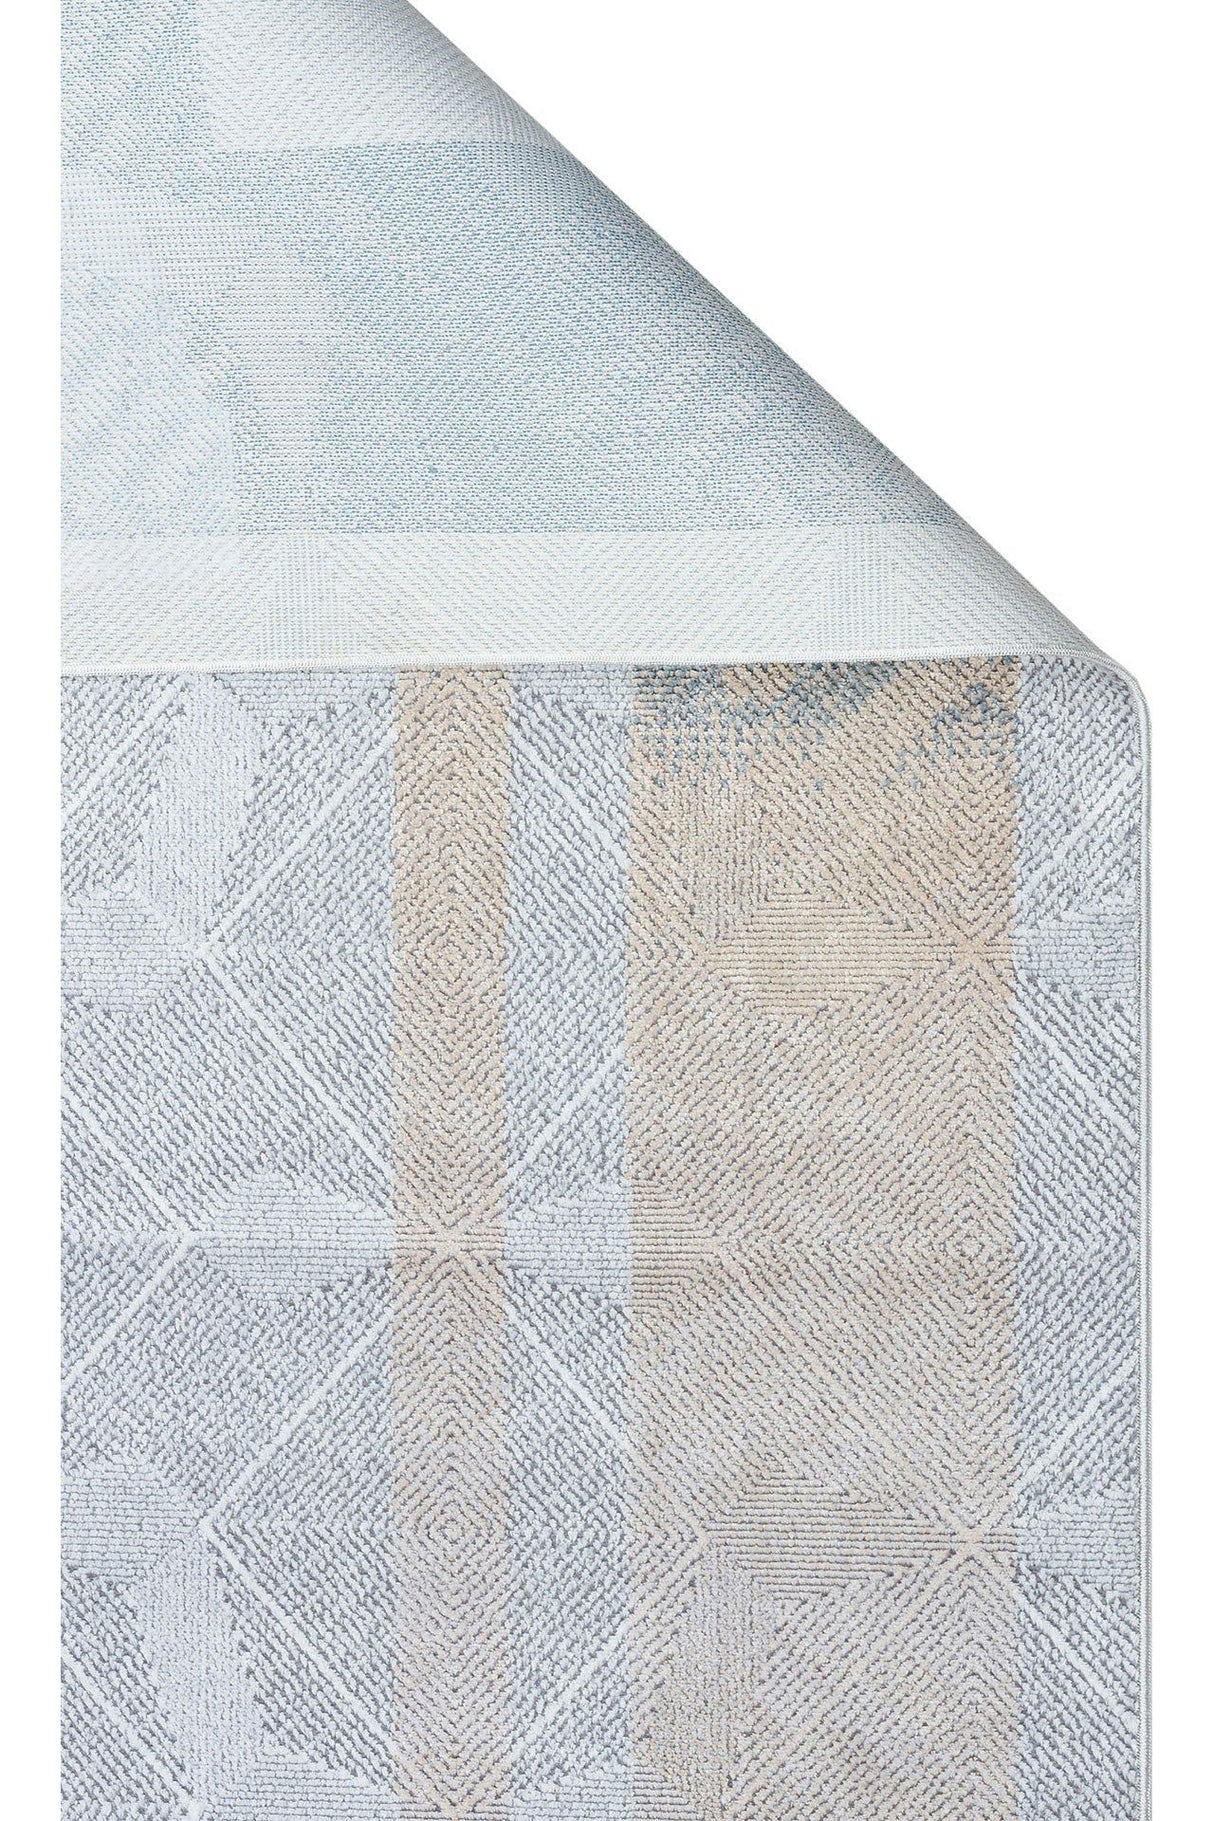 #Turkish_Carpets_Rugs# #Modern_Carpets# #Abrash_Carpets#St 103 Grey Blue